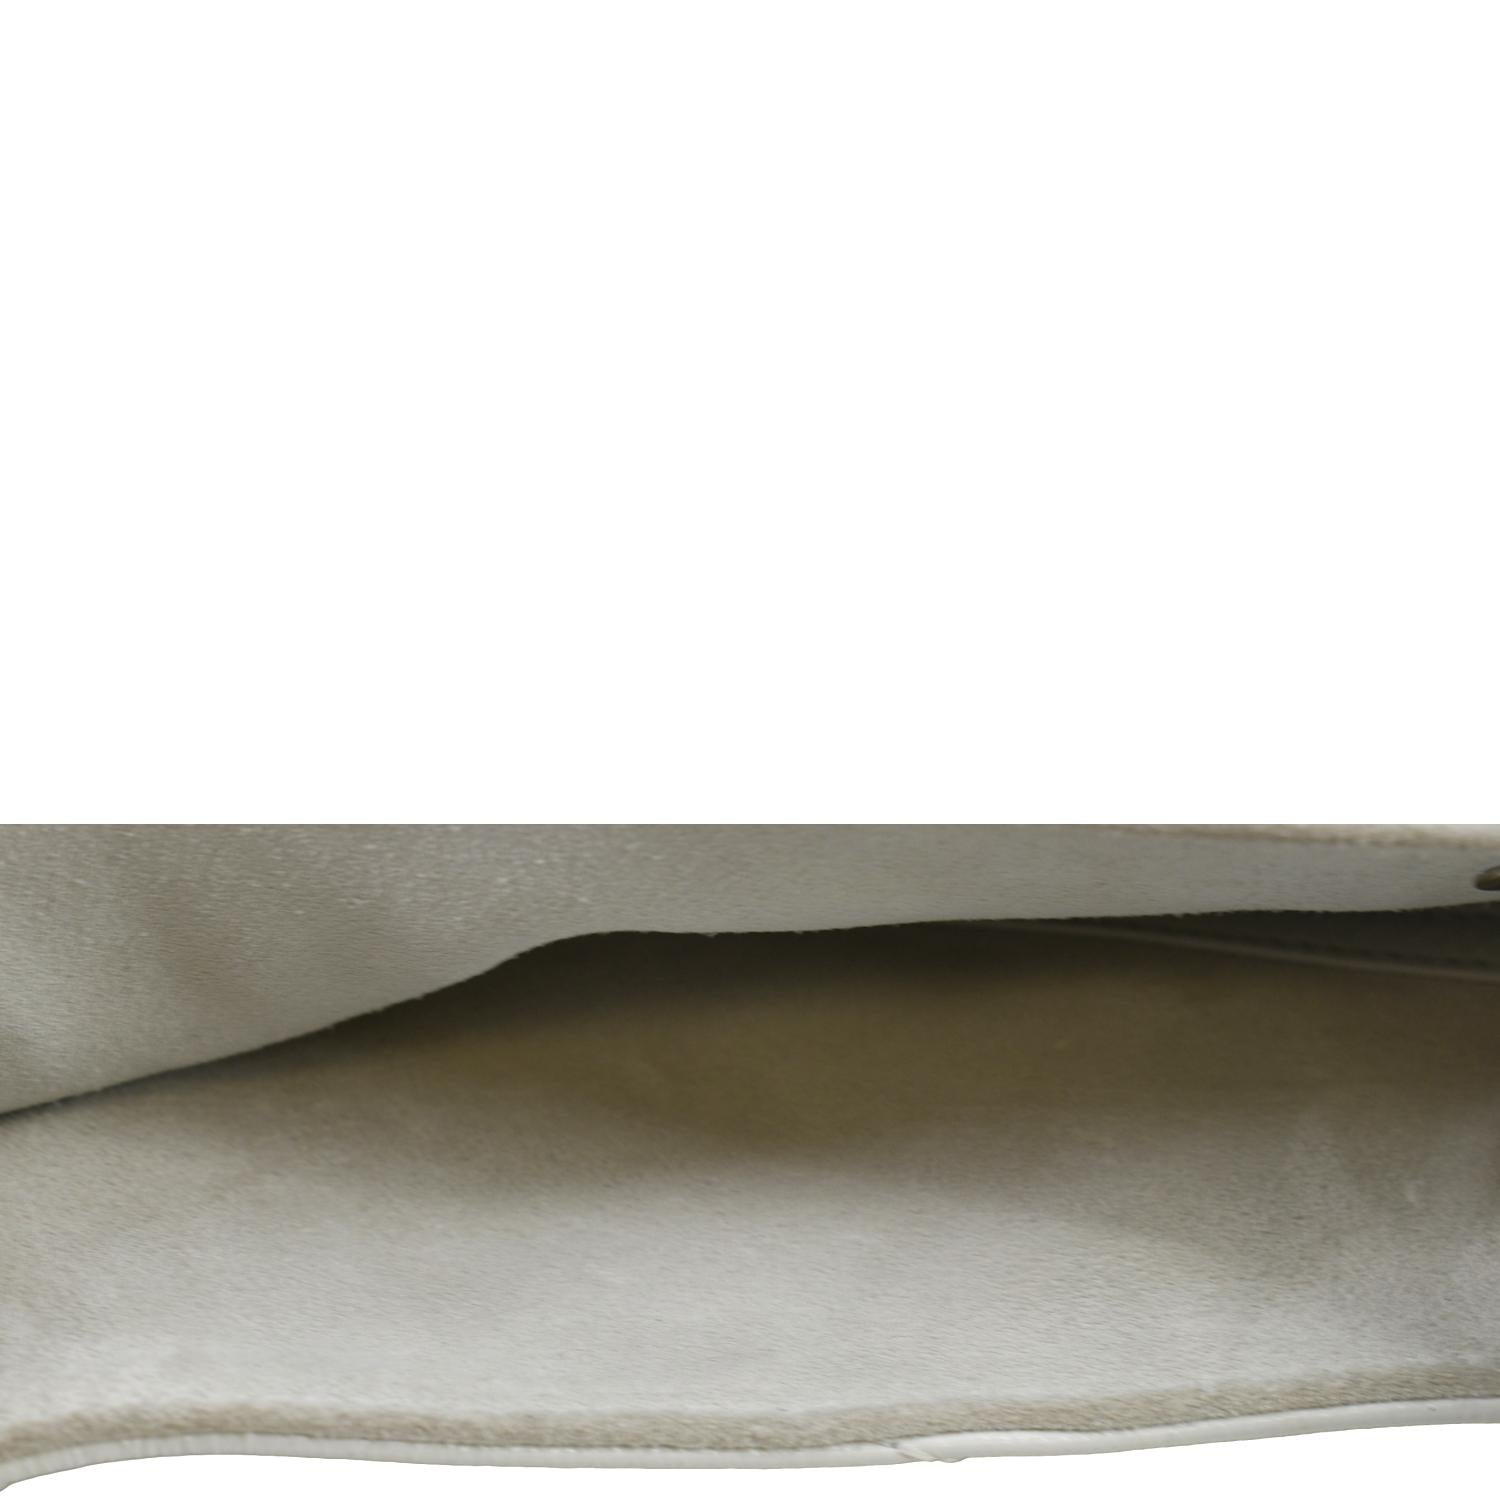 Chanel Droplet Hobo Patent Medium White 90037172